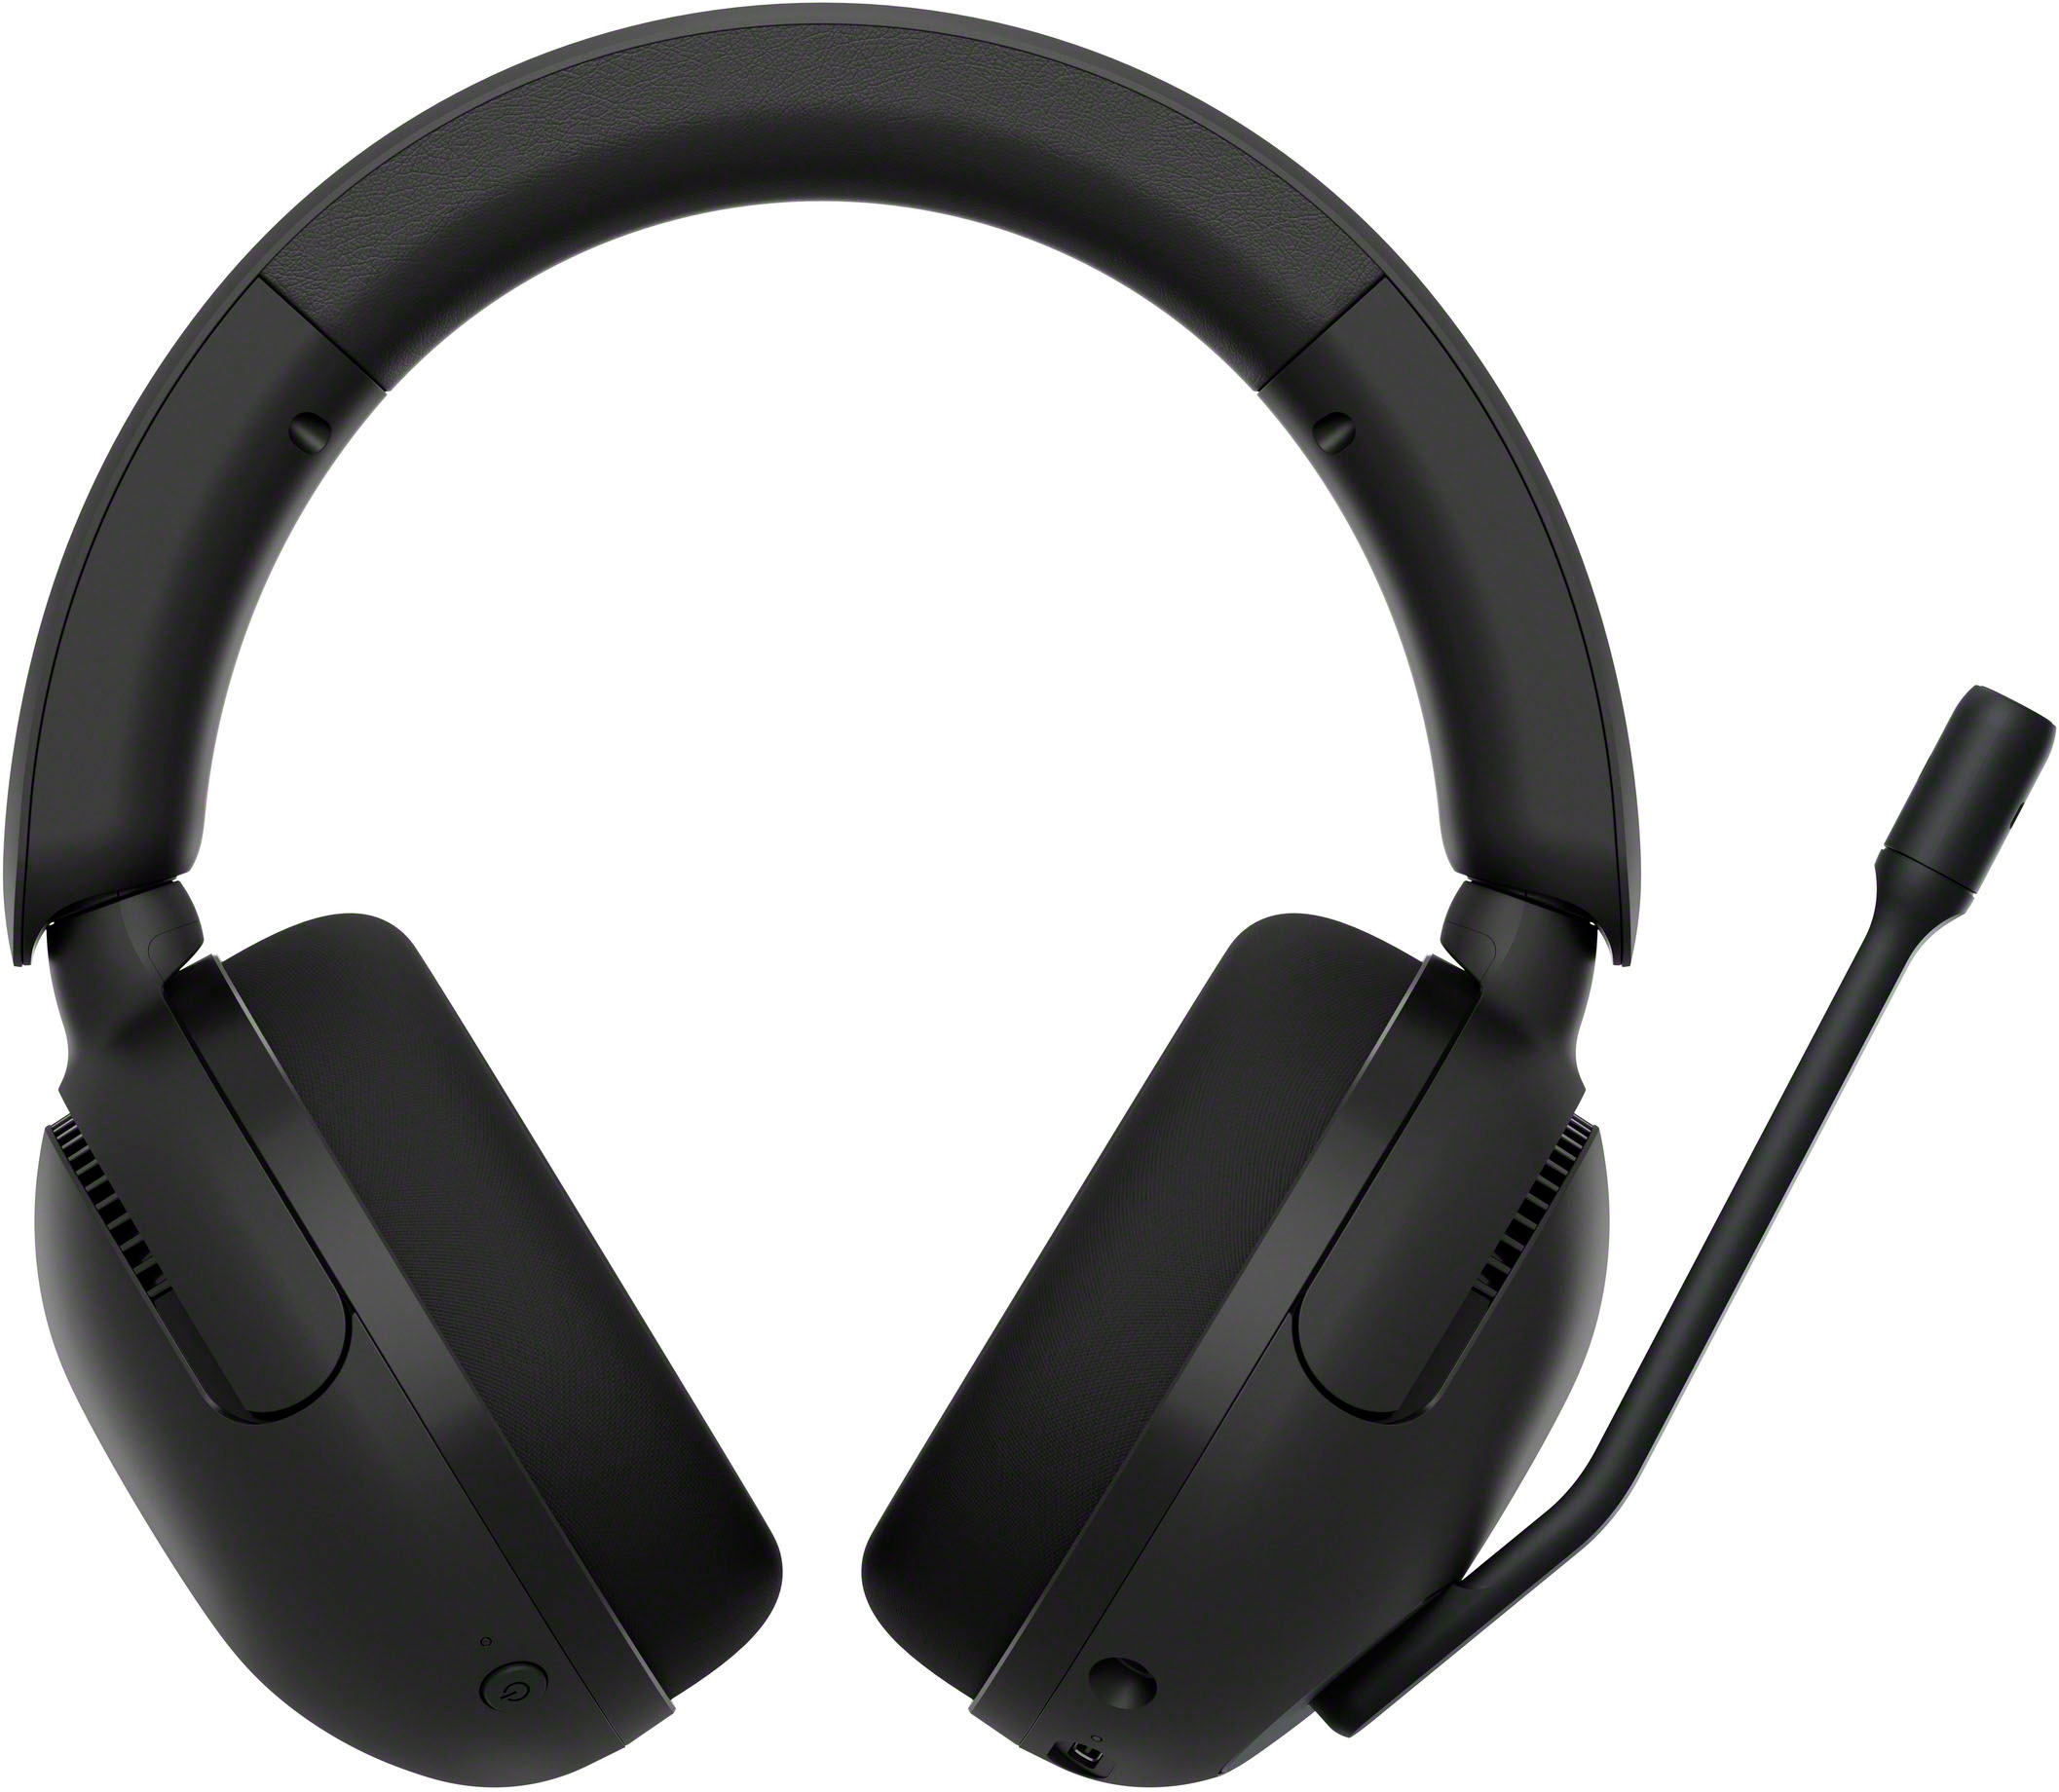 Sony - INZONE H5 Wireless Gaming Headset - Black